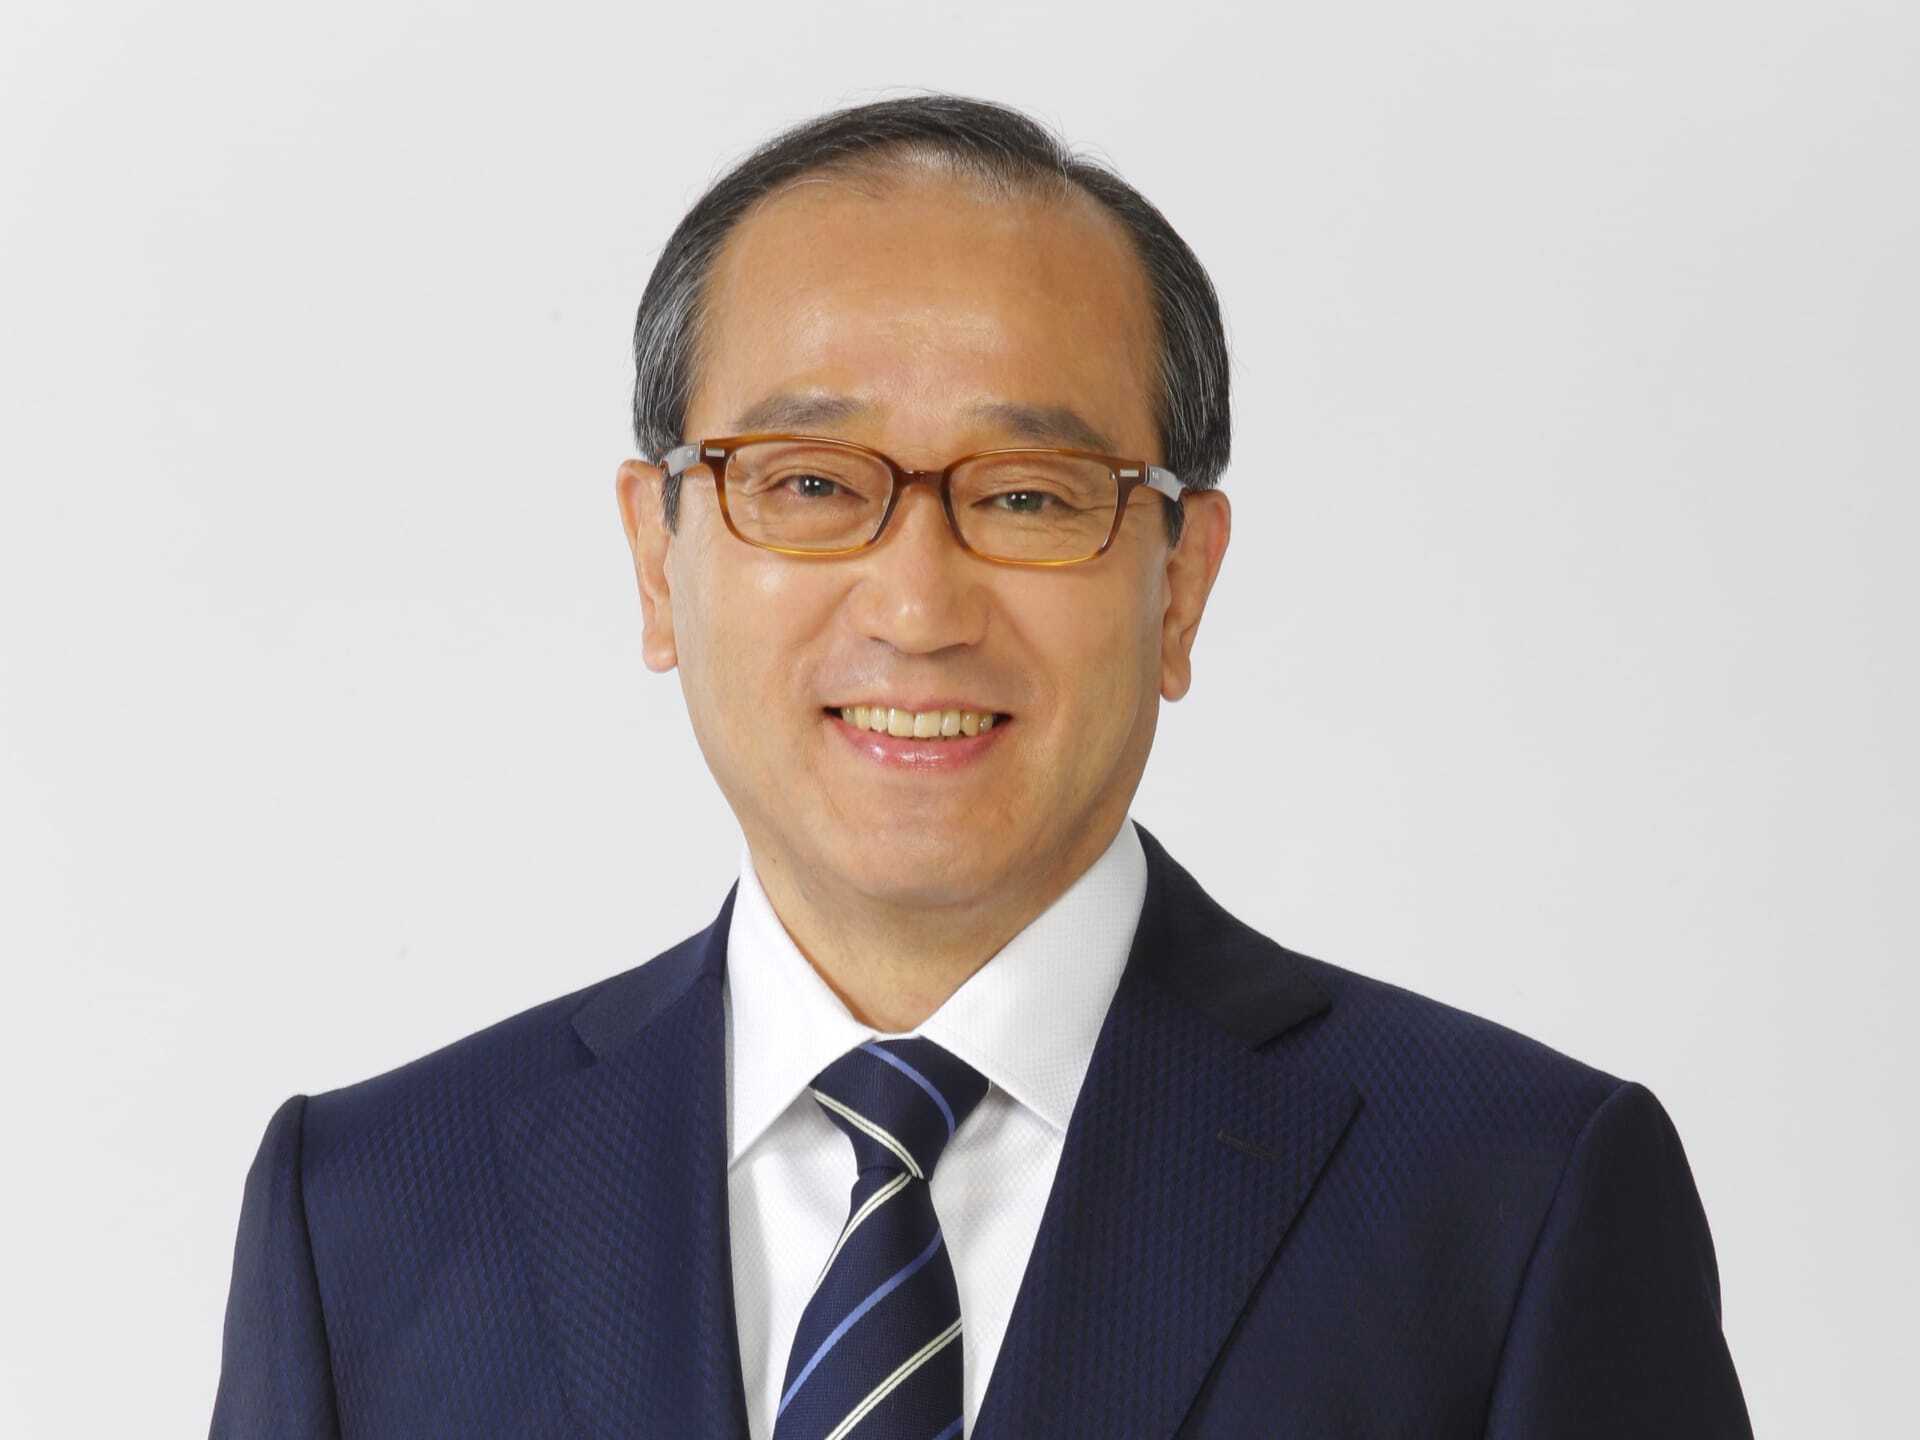 Facial photo of Mayor Matsui